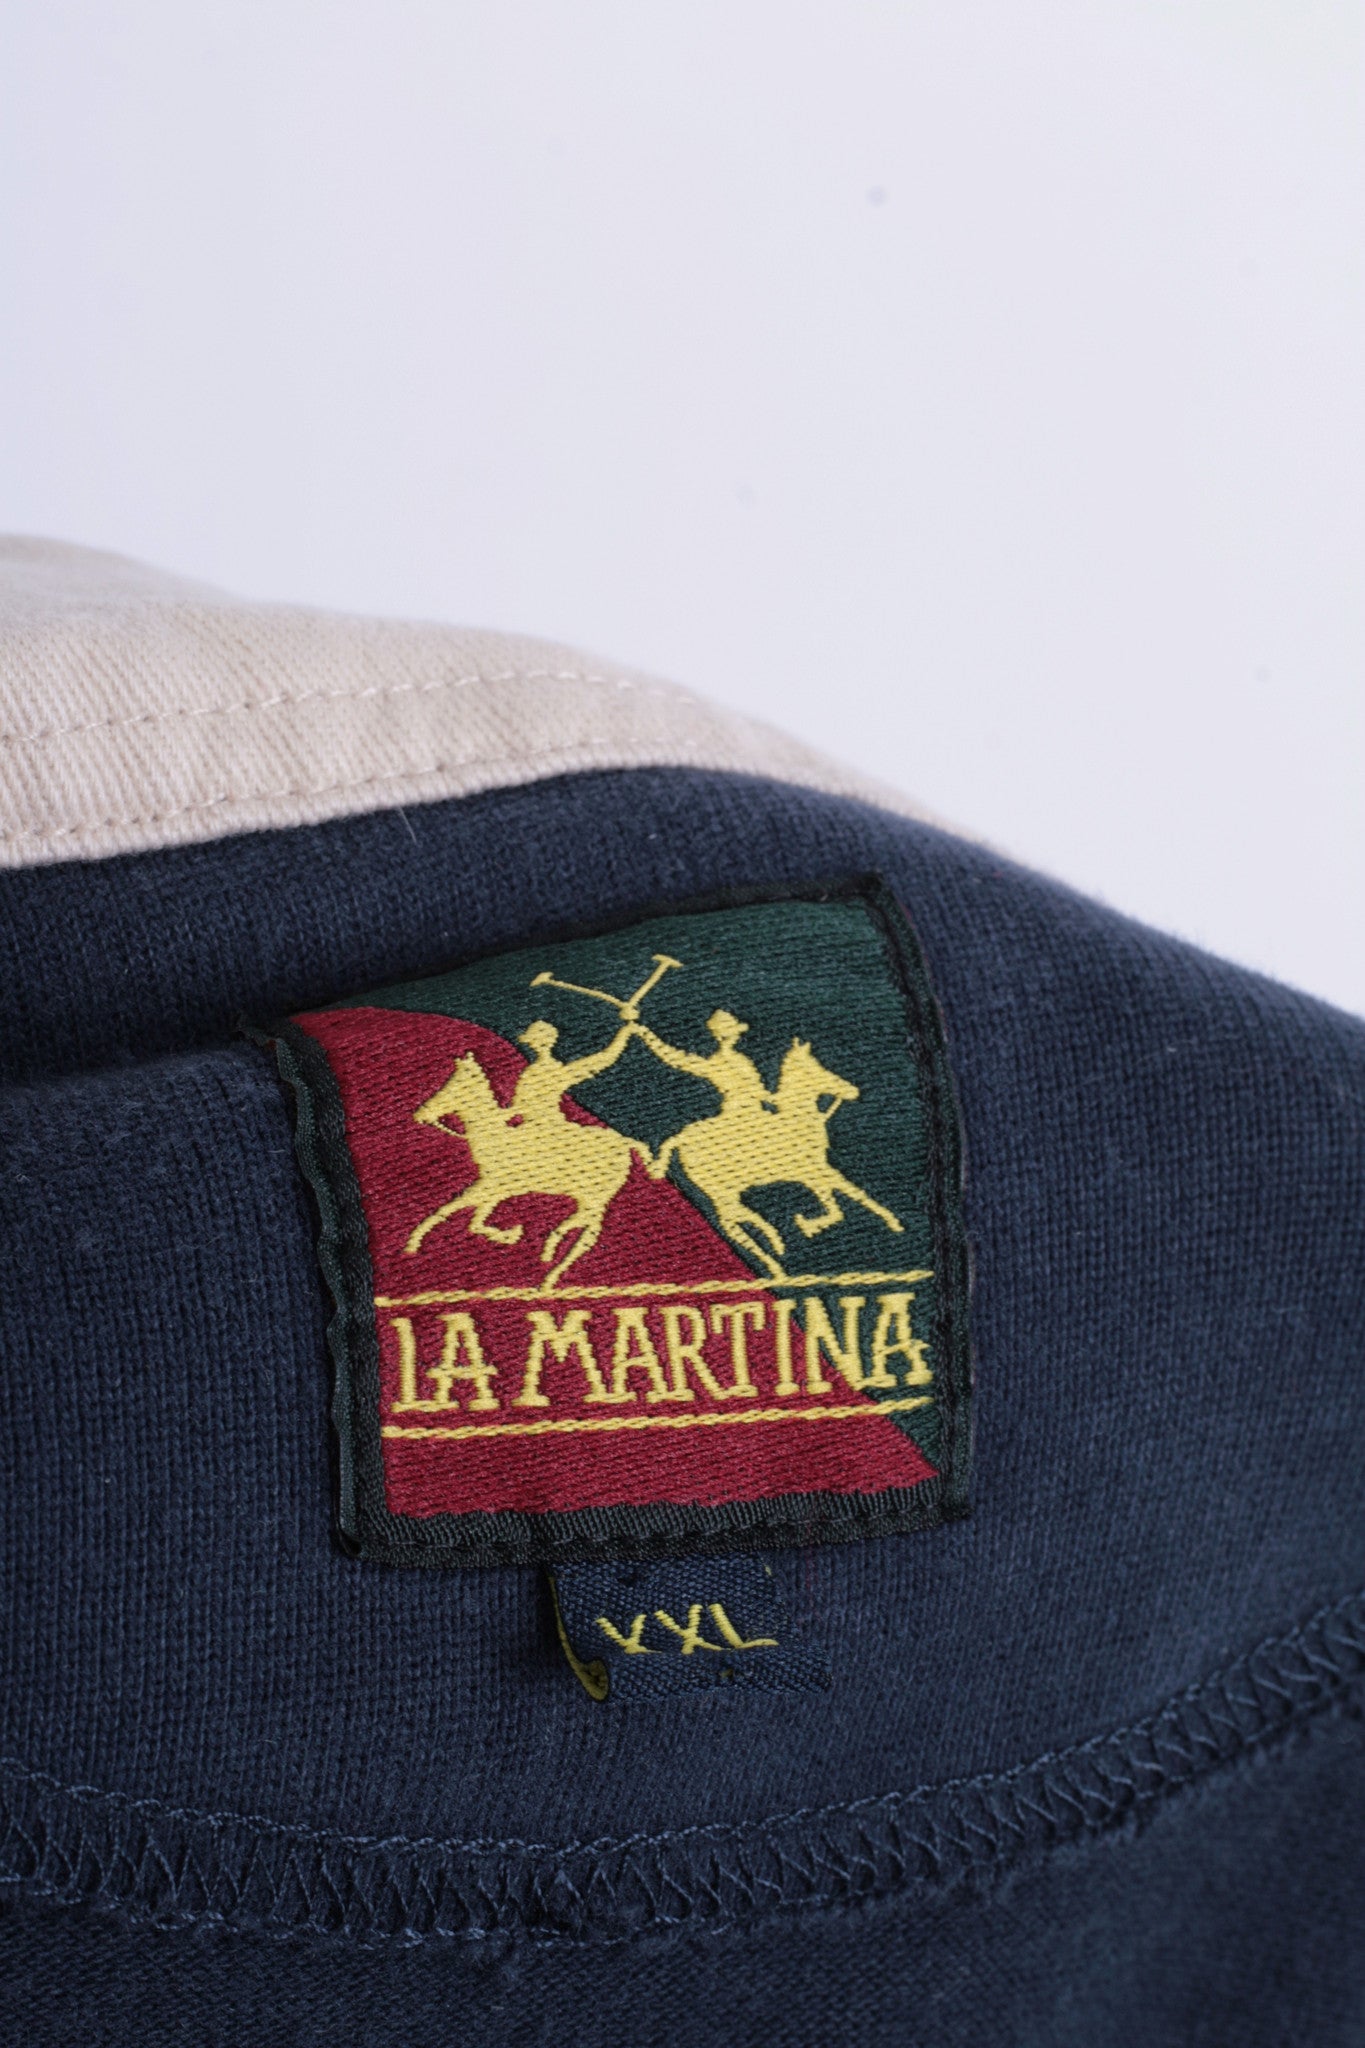 La Martina Mens XXL Polo Shirt Navy Blue Long Sleeve Cotton - RetrospectClothes